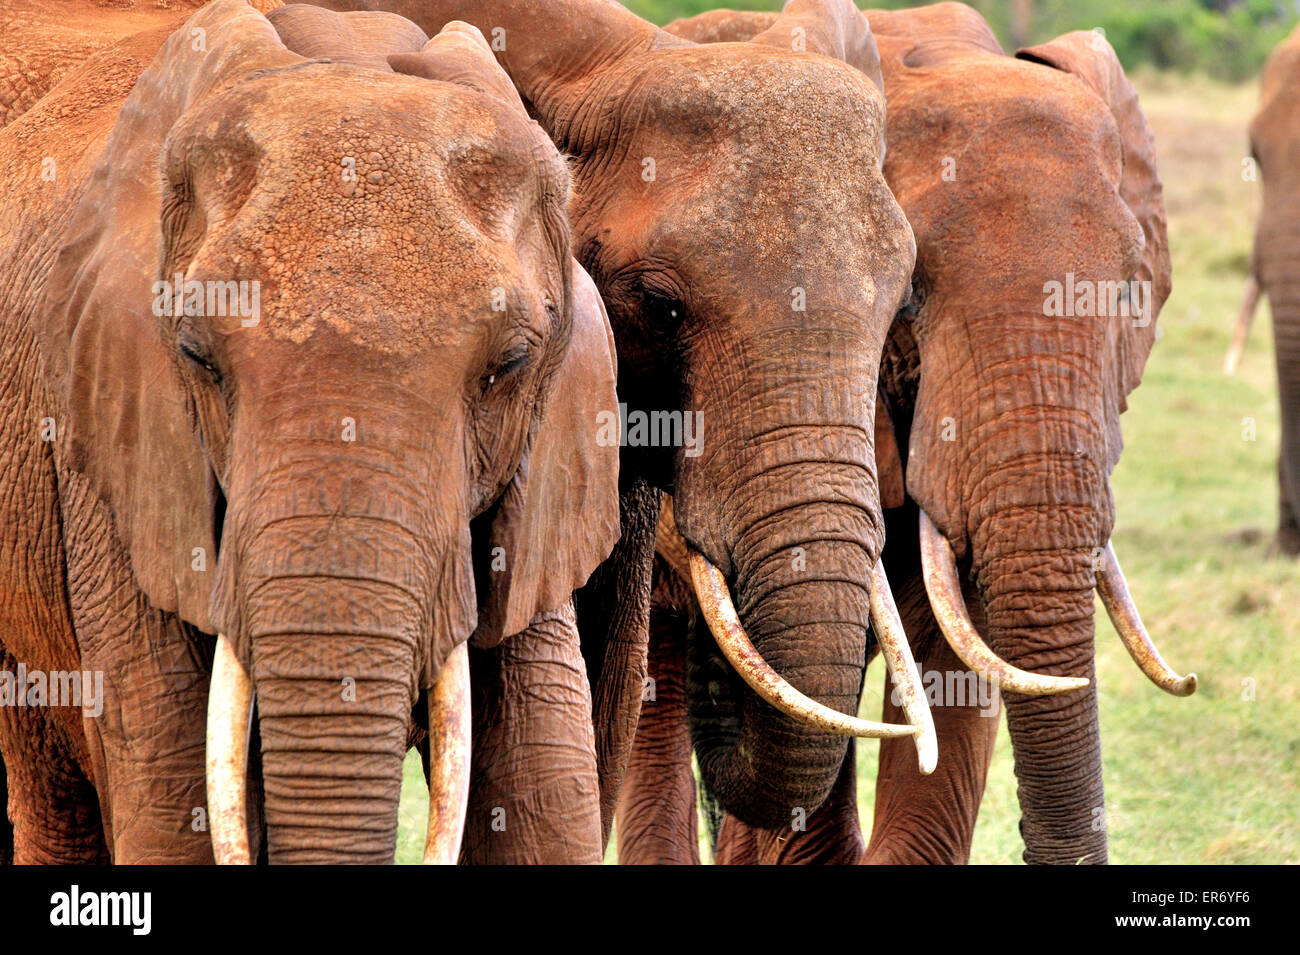 Three Elephants walking side on side, Tusks and heads, Kenya Stock Photo